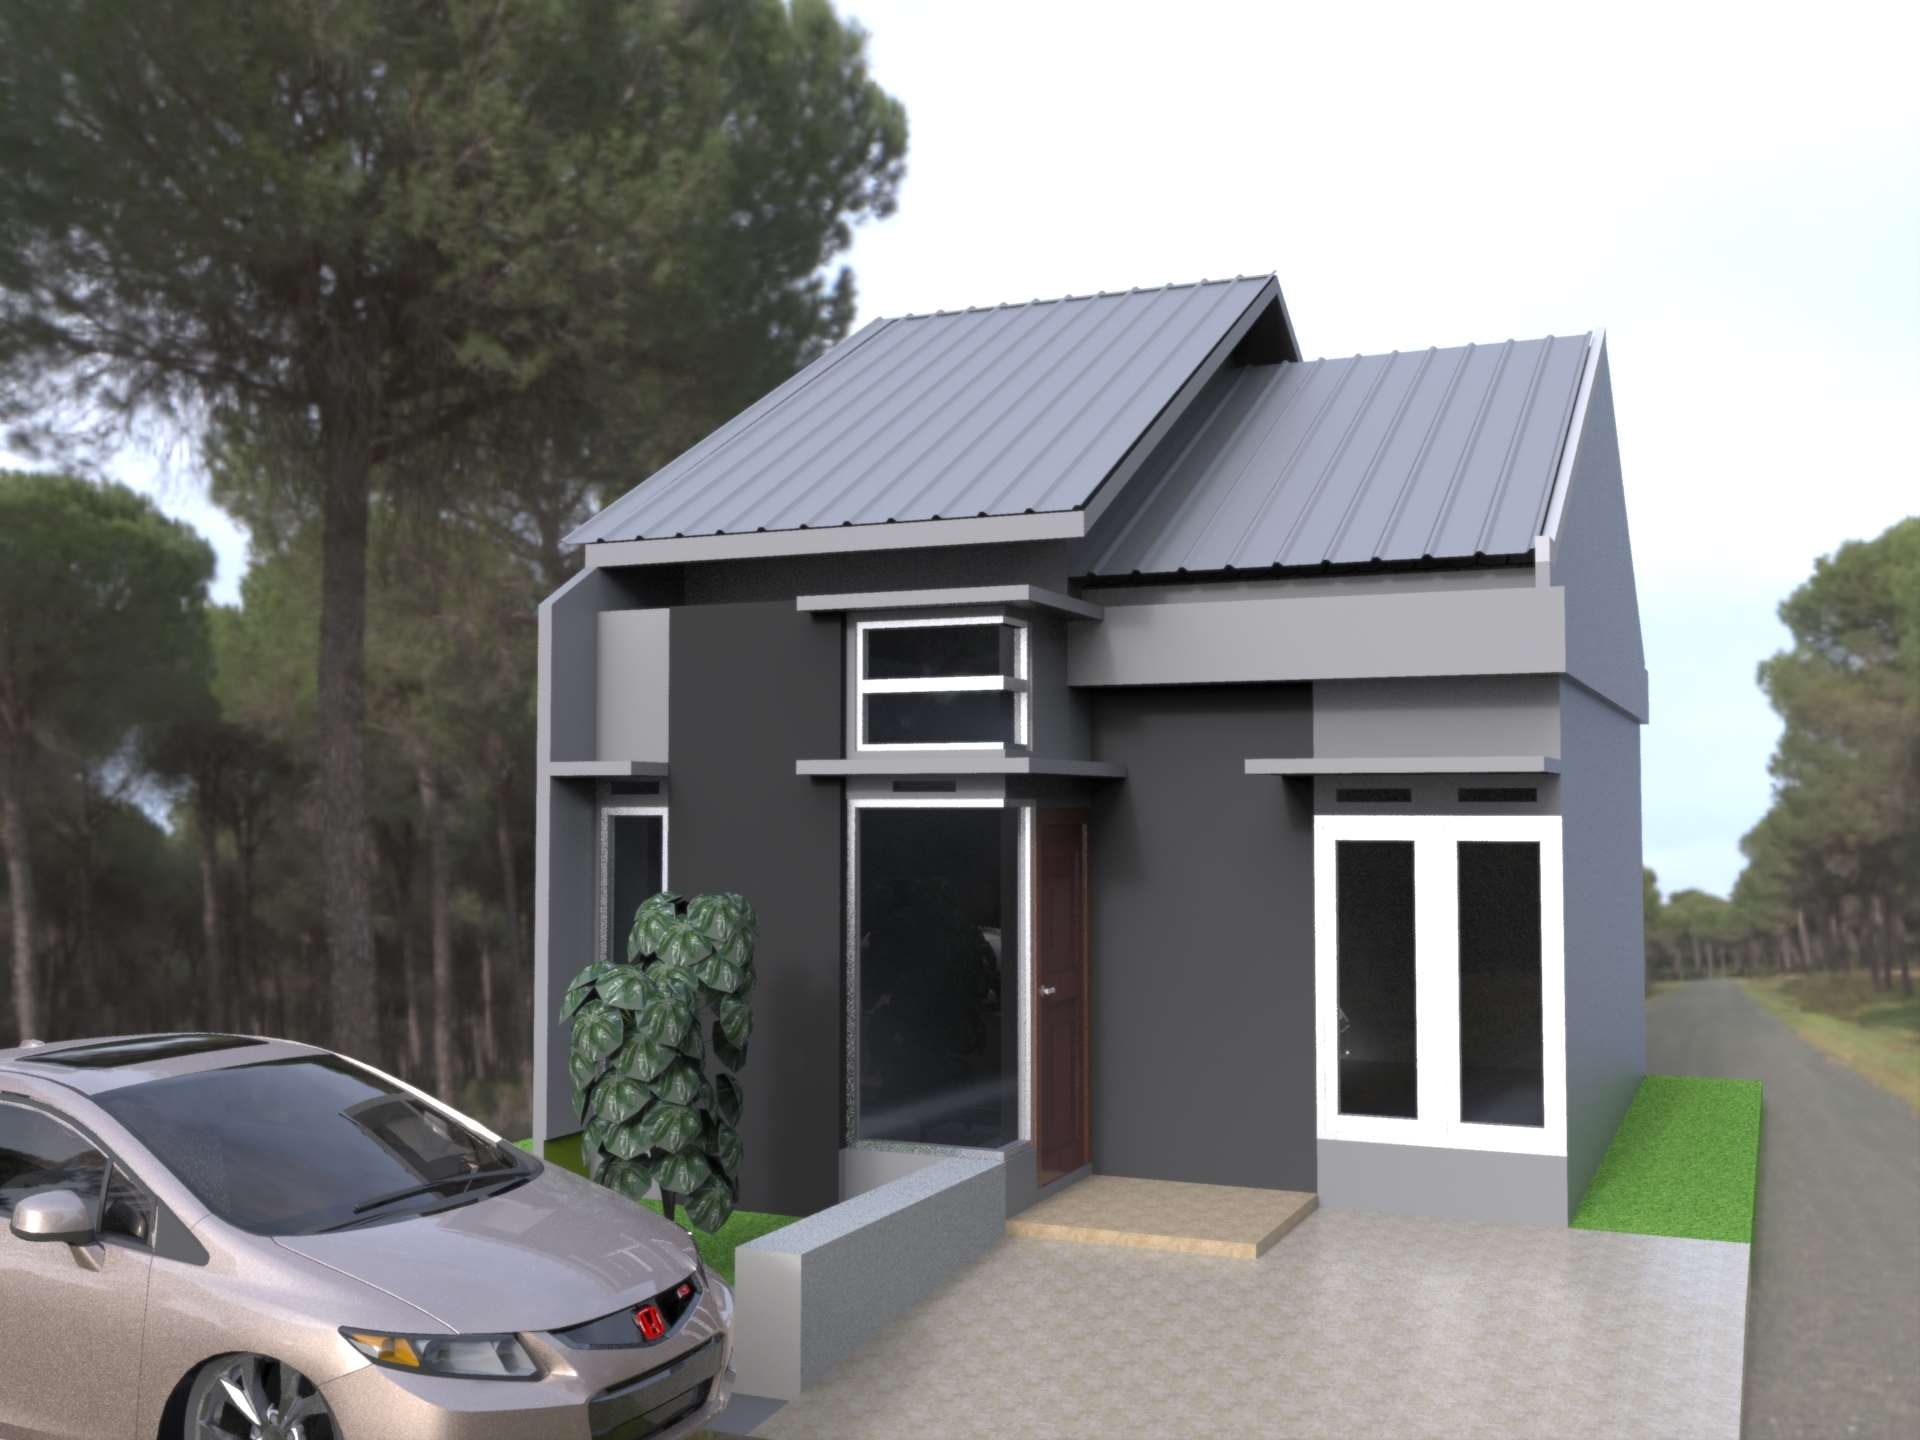 3d house render animation keyshot rumah, plant, car, motor vehicle